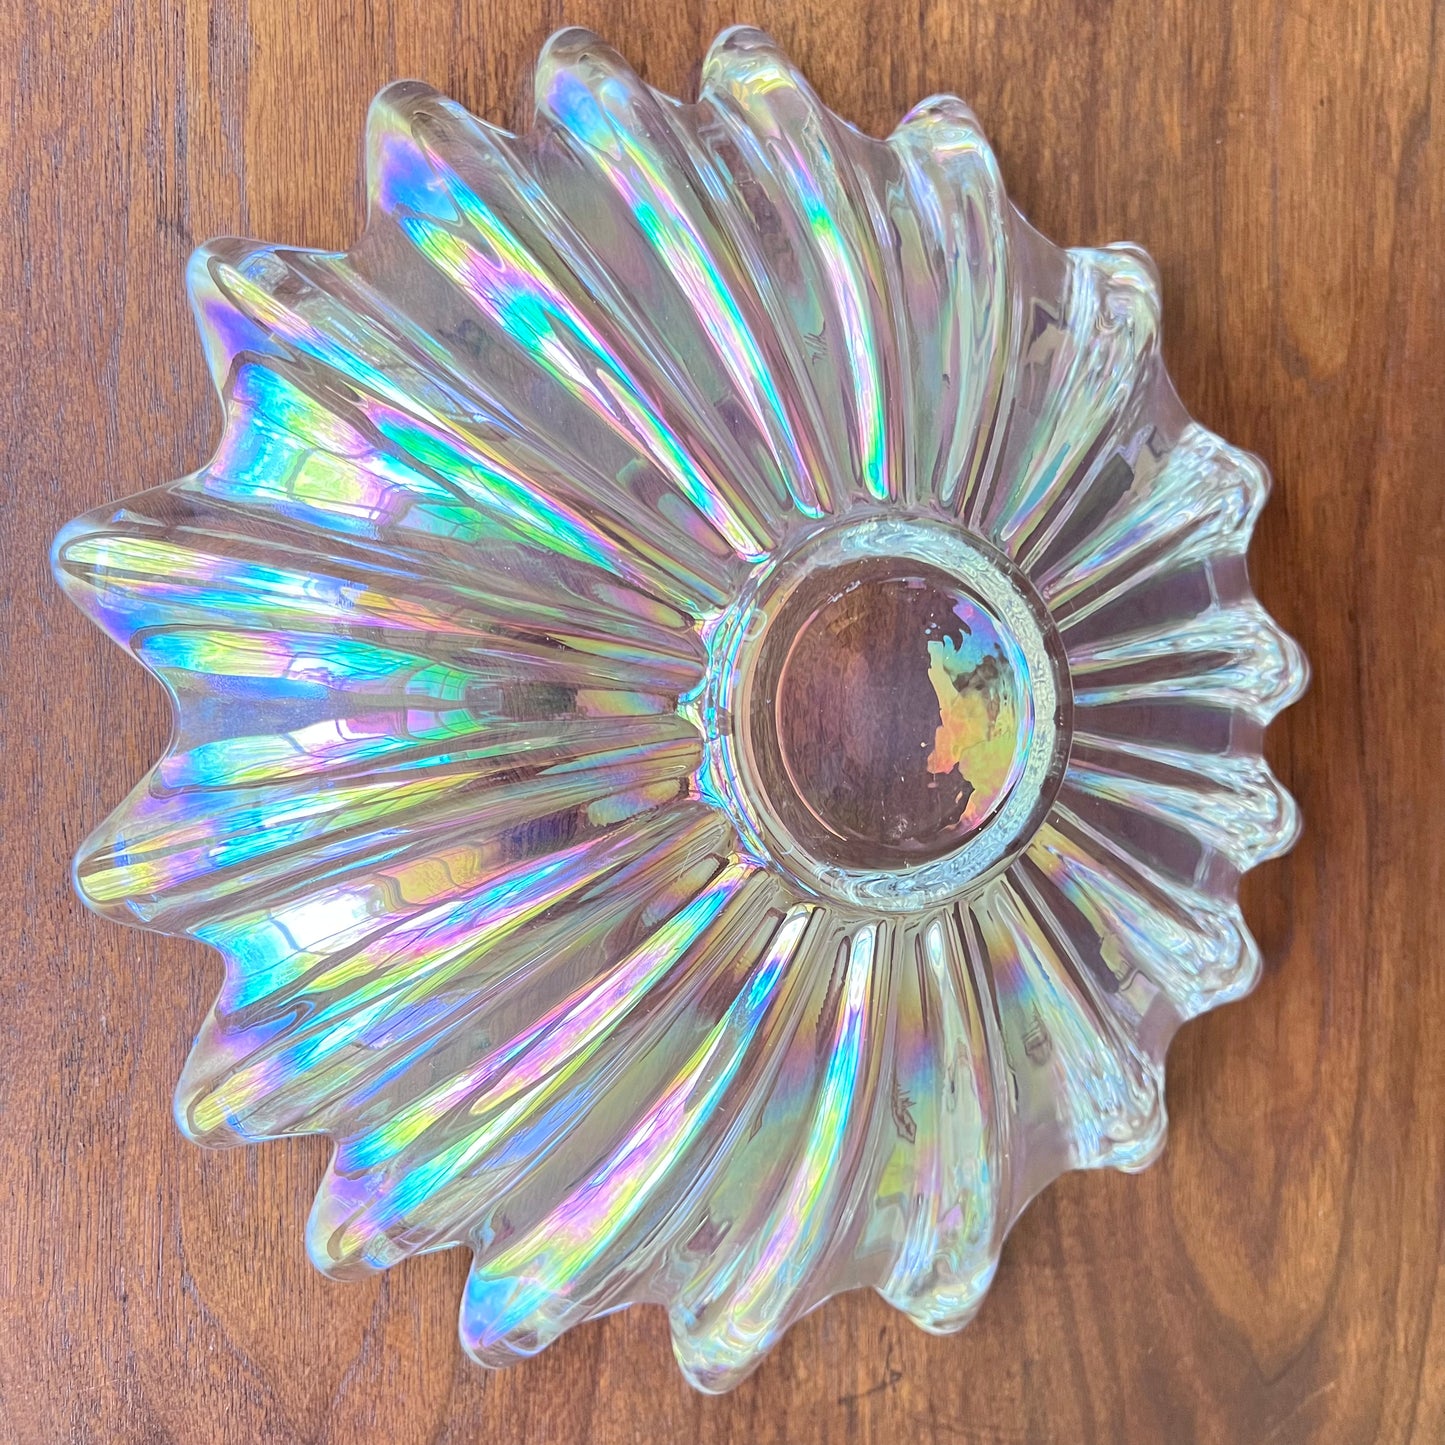 Vintage Federal Glass Iridescent Celestial Bowl